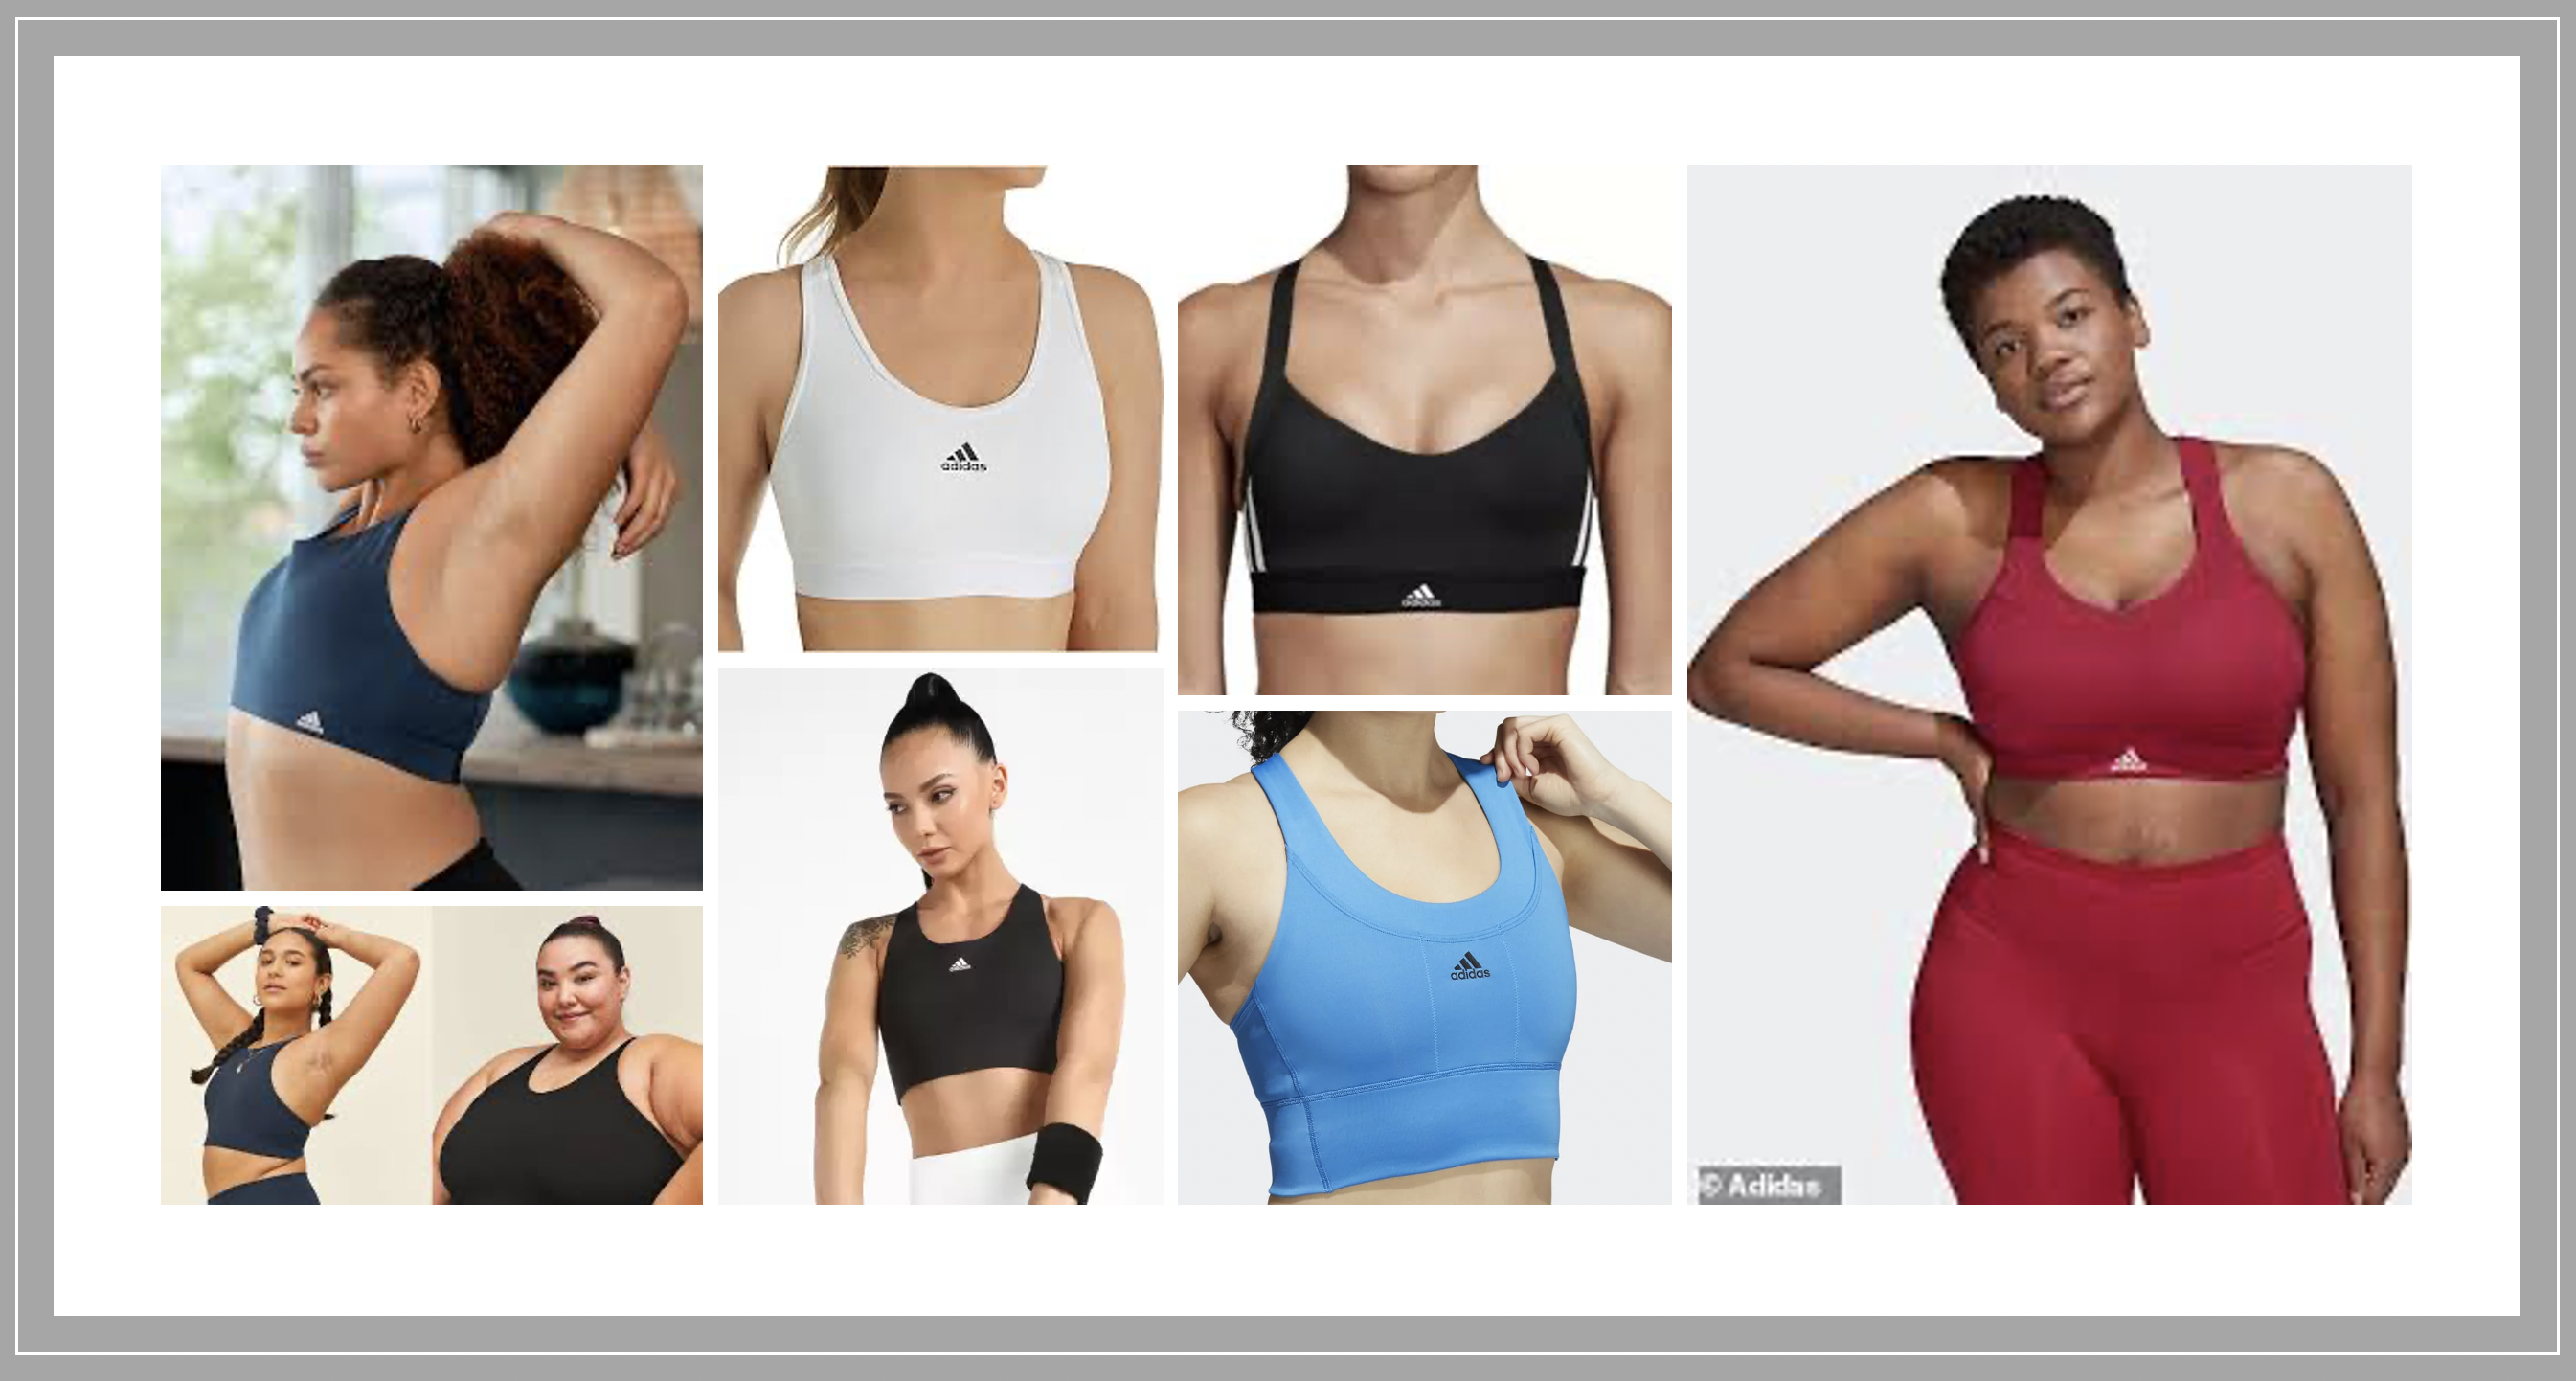 Adidas Sports bra - a campaign well handled. — Sanjeev Kotnala